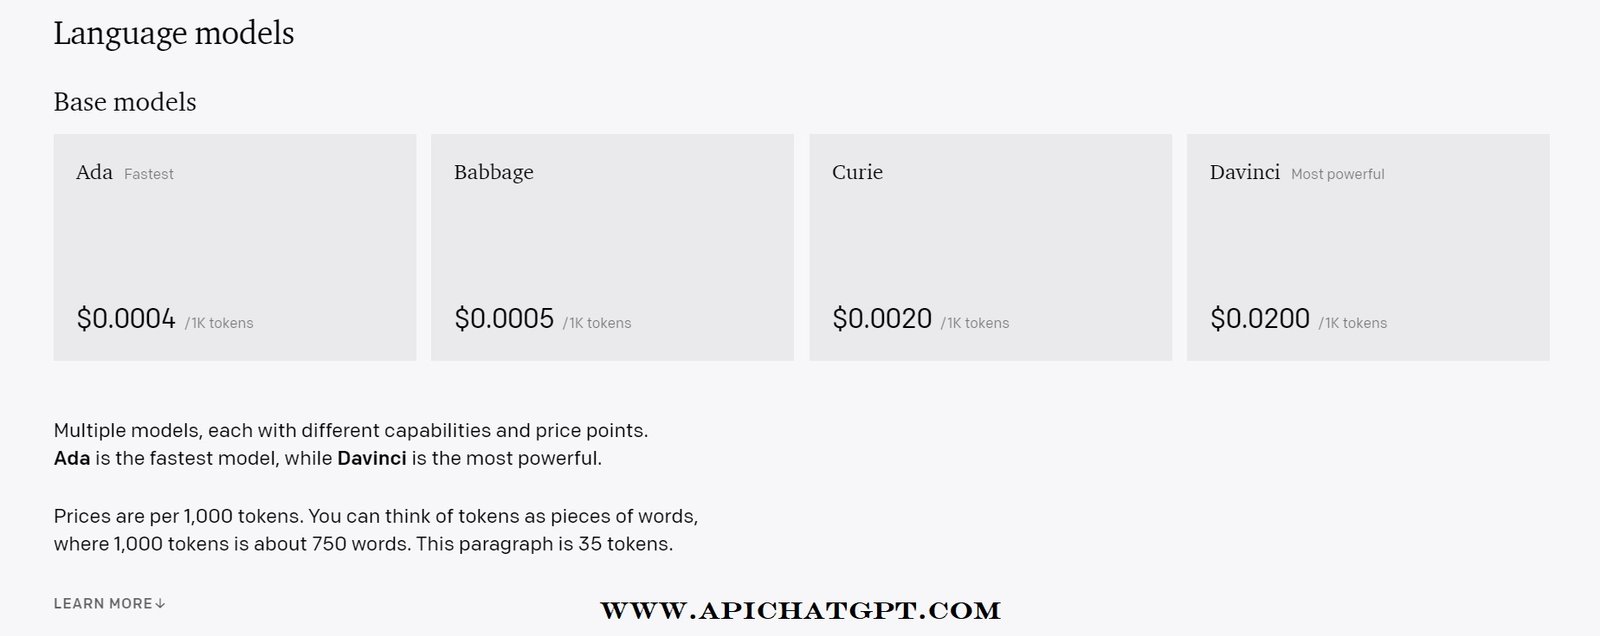 API Pricing Plans for Language models